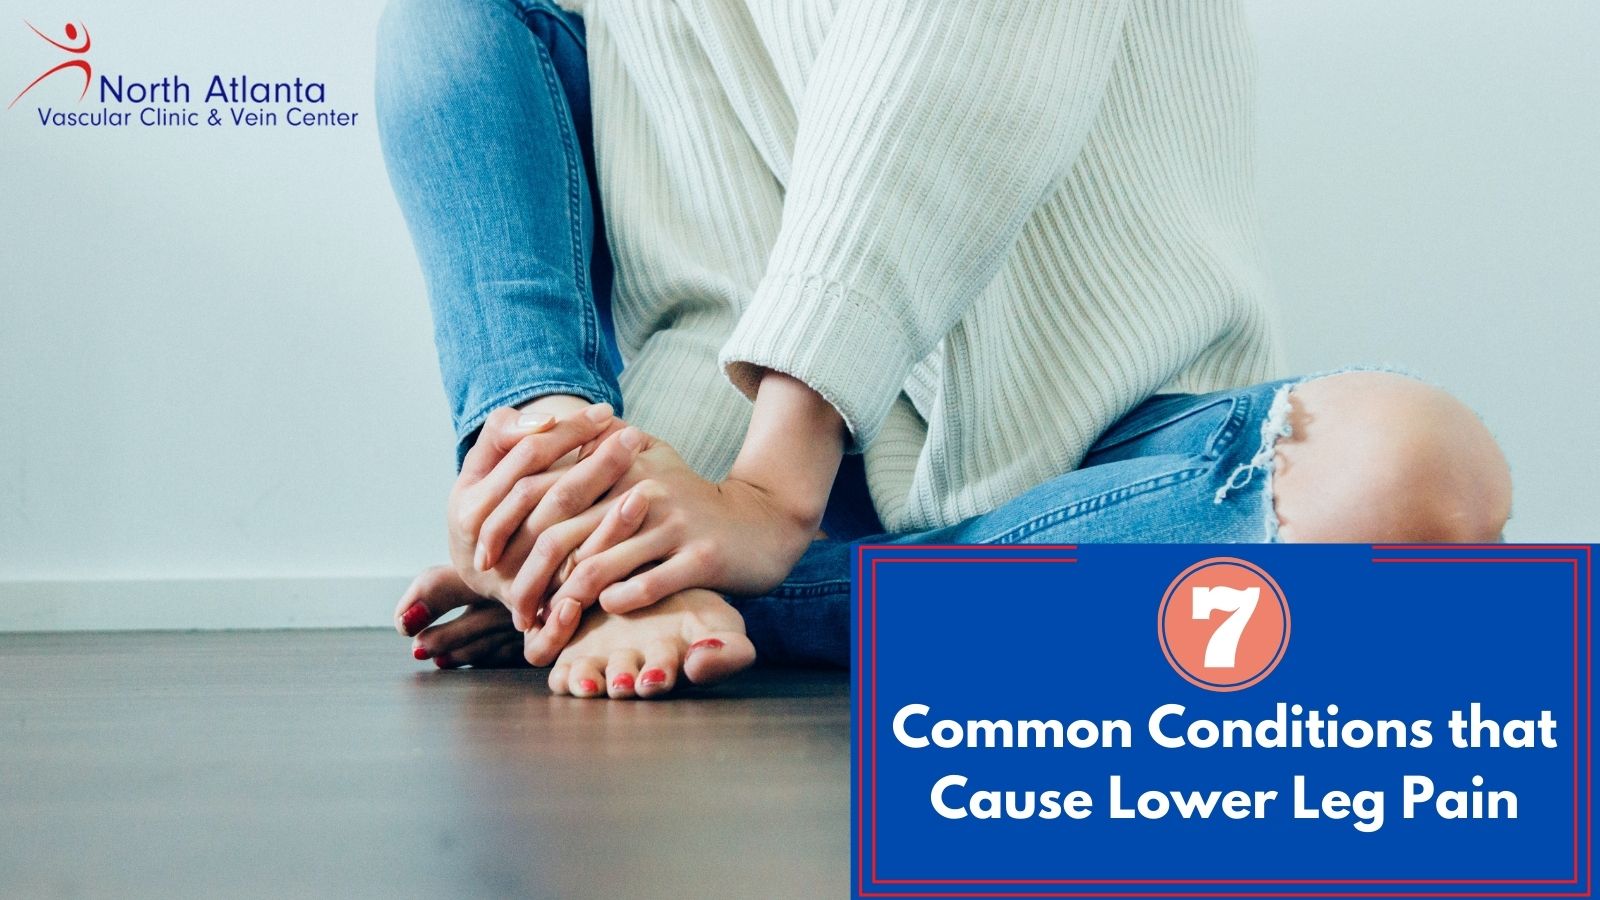 https://www.navascularclinic.com/blog/Uploads/common-conditions-that-cause-lower-leg-pain.jpg